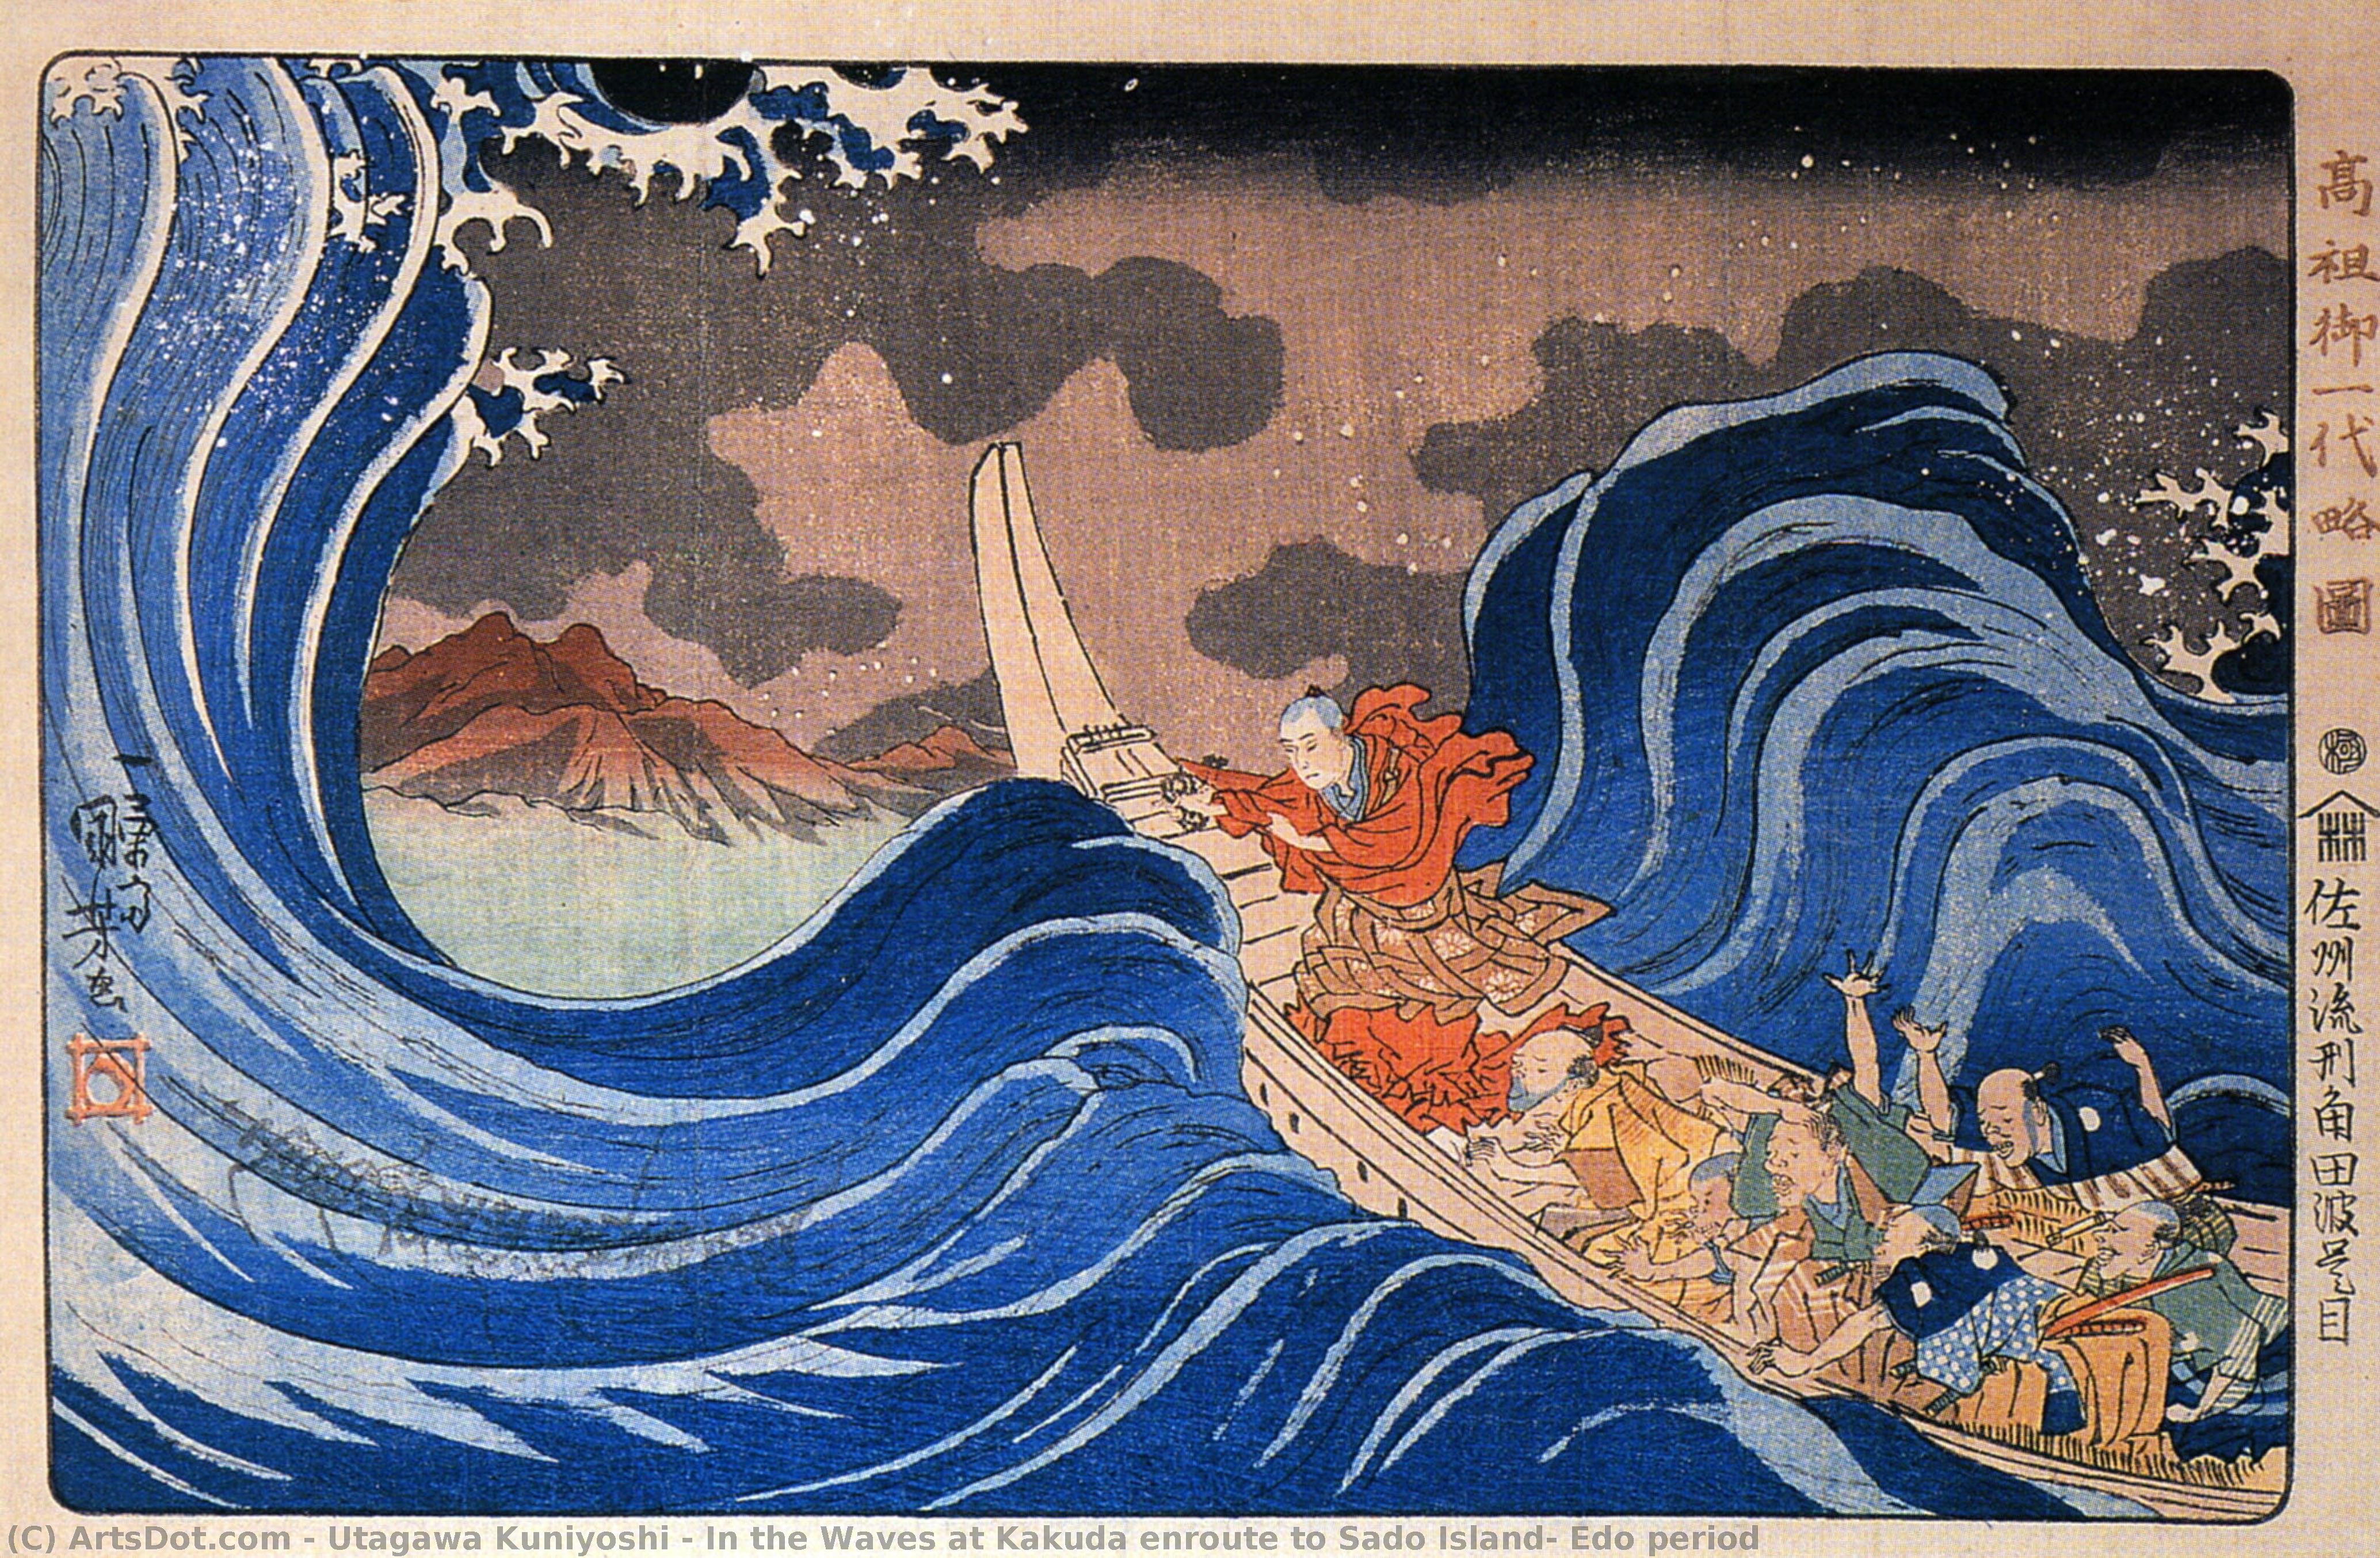  Oil Painting Replica In the Waves at Kakuda enroute to Sado Island, Edo period, 1835 by Utagawa Kuniyoshi (1797-1861, Japan) | ArtsDot.com